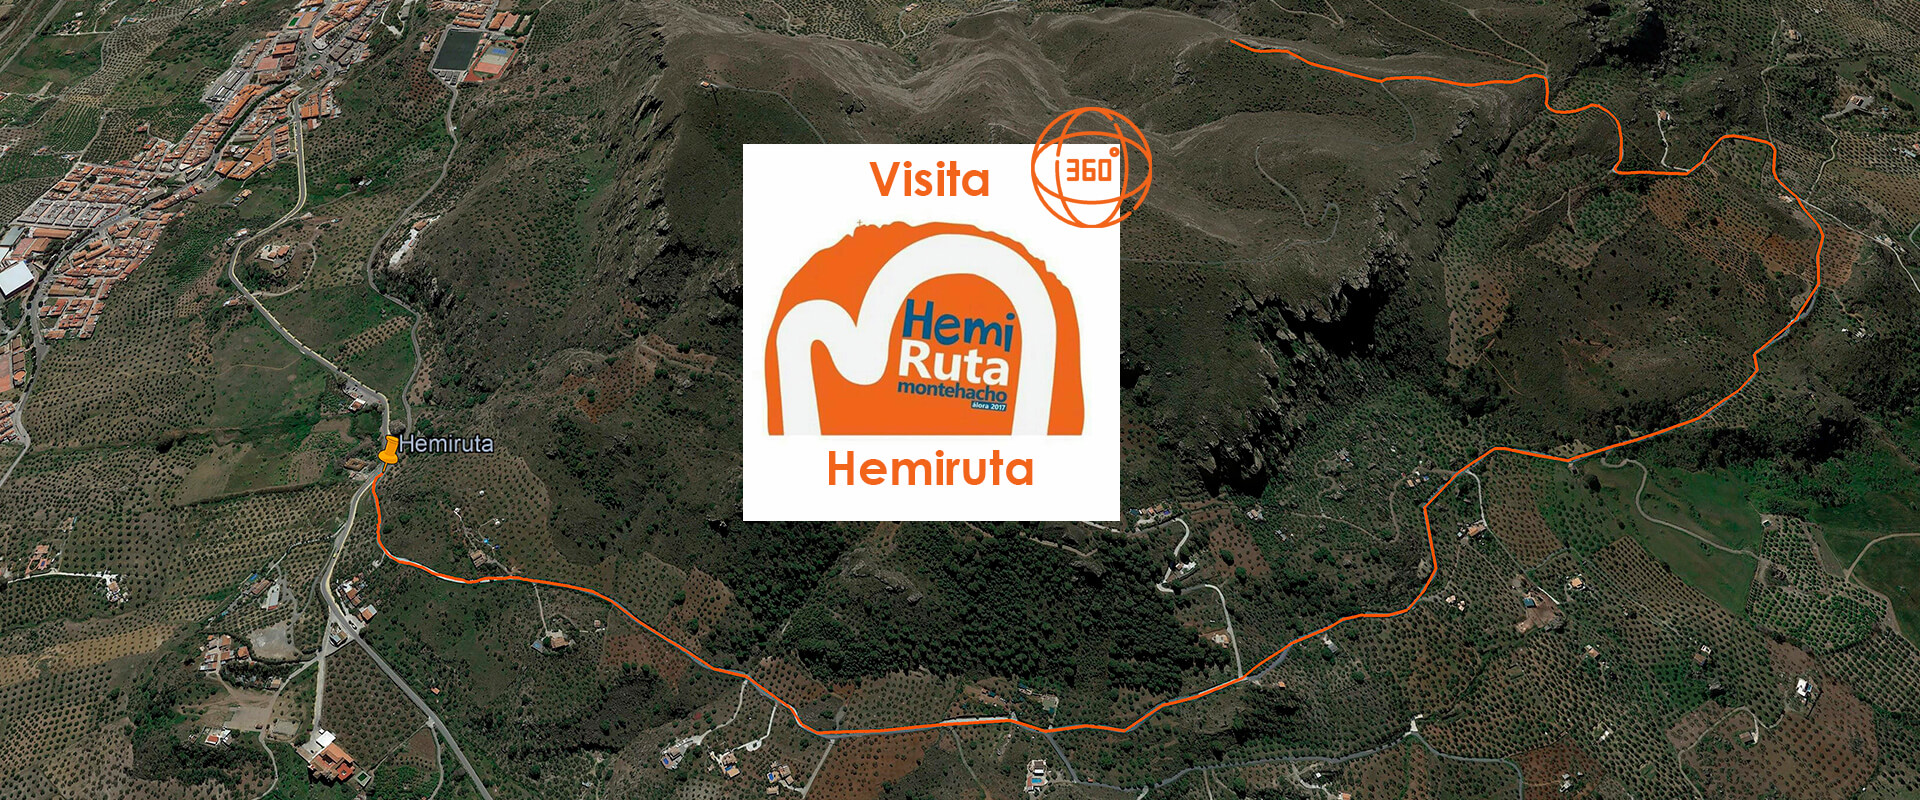 Visita Hemiruta 360º